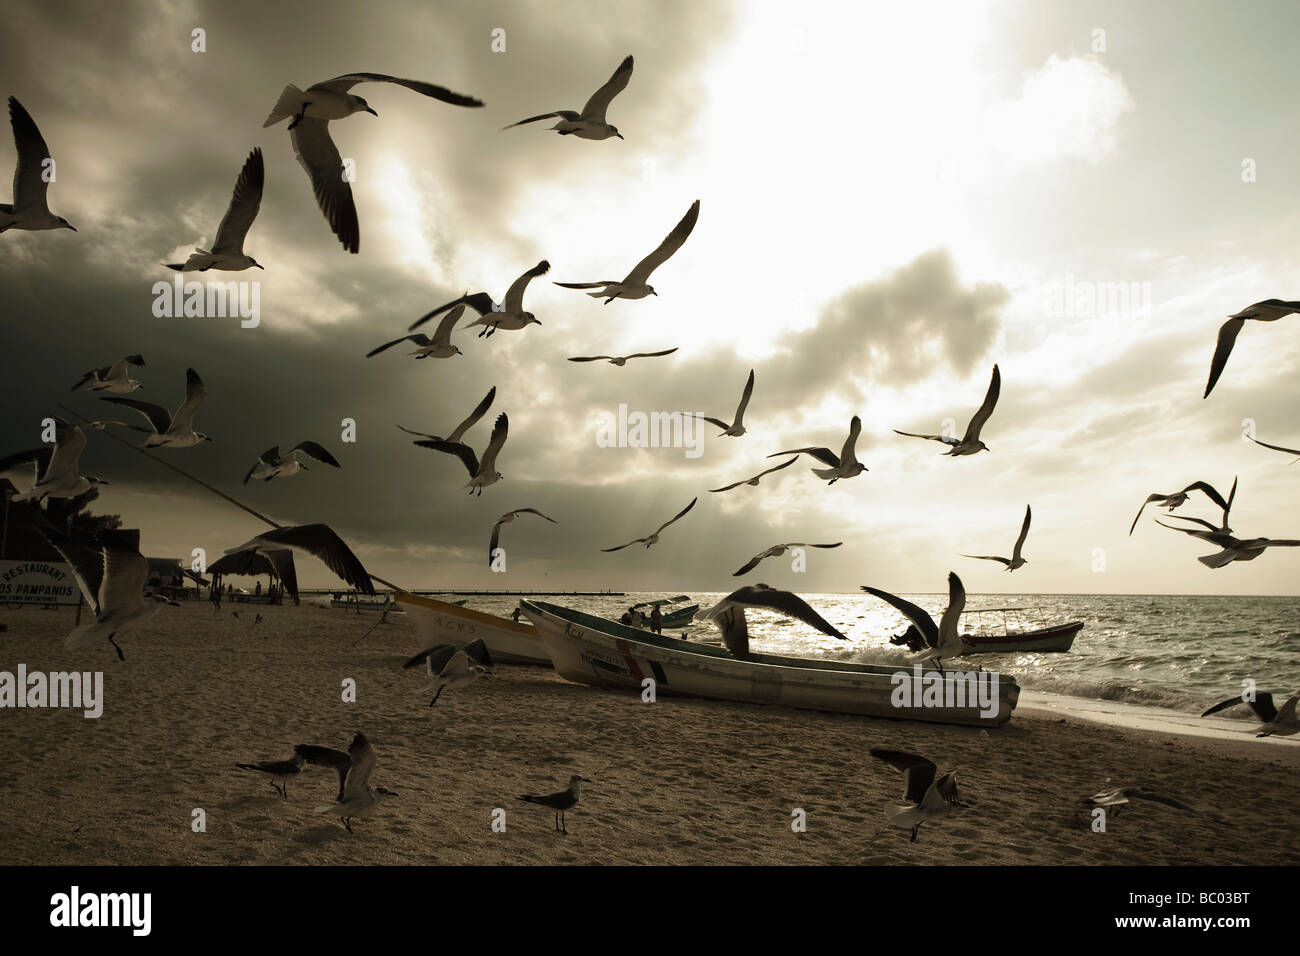 Viele Vögel fliegen über einige Boote in Celestun, Yucatan, Mexiko. Stockfoto